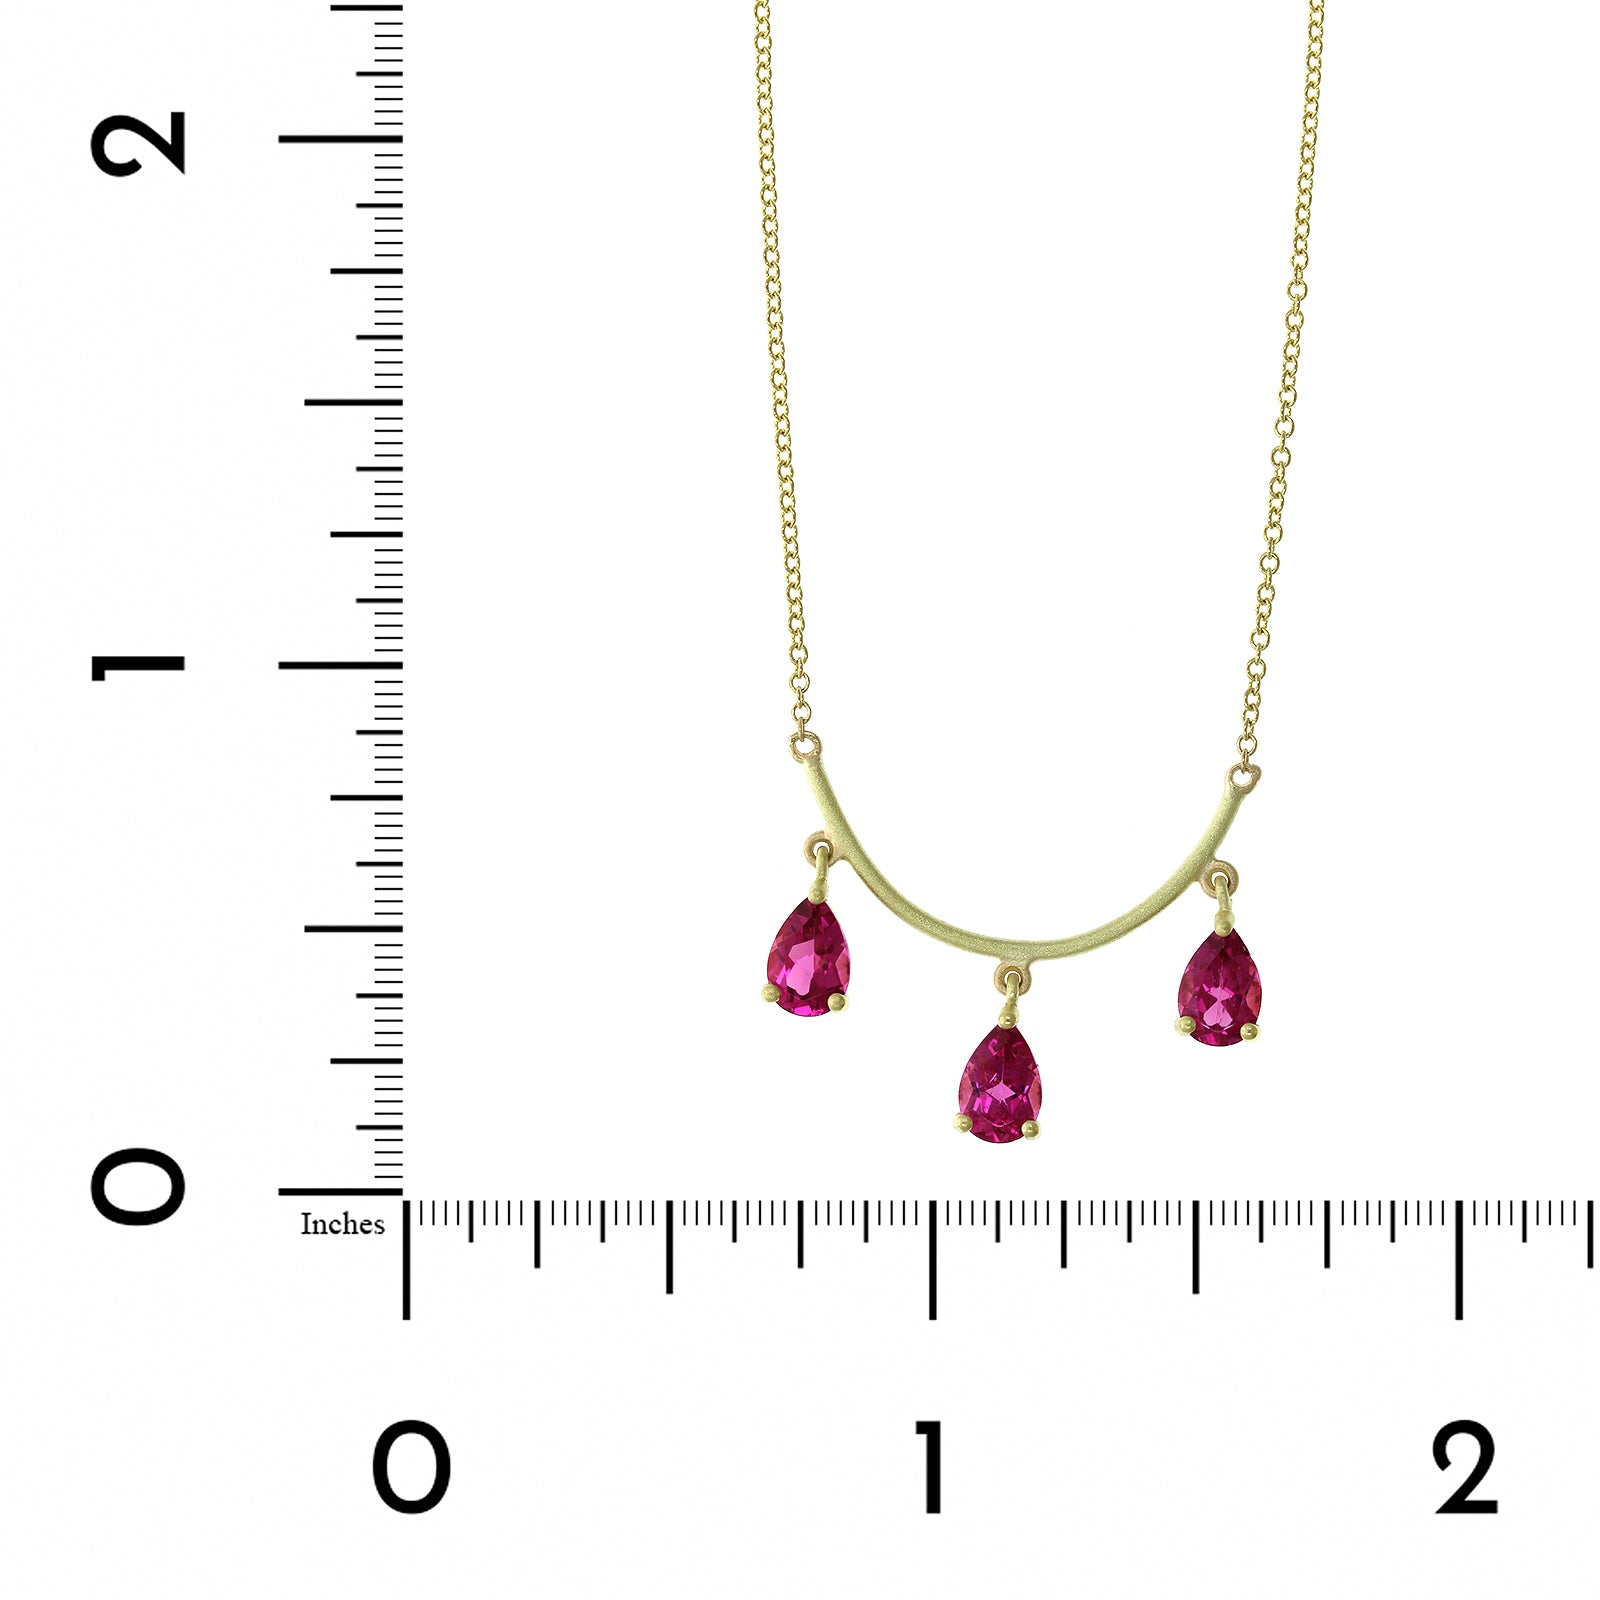 18K Yellow Gold Pink Tourmaline Necklace